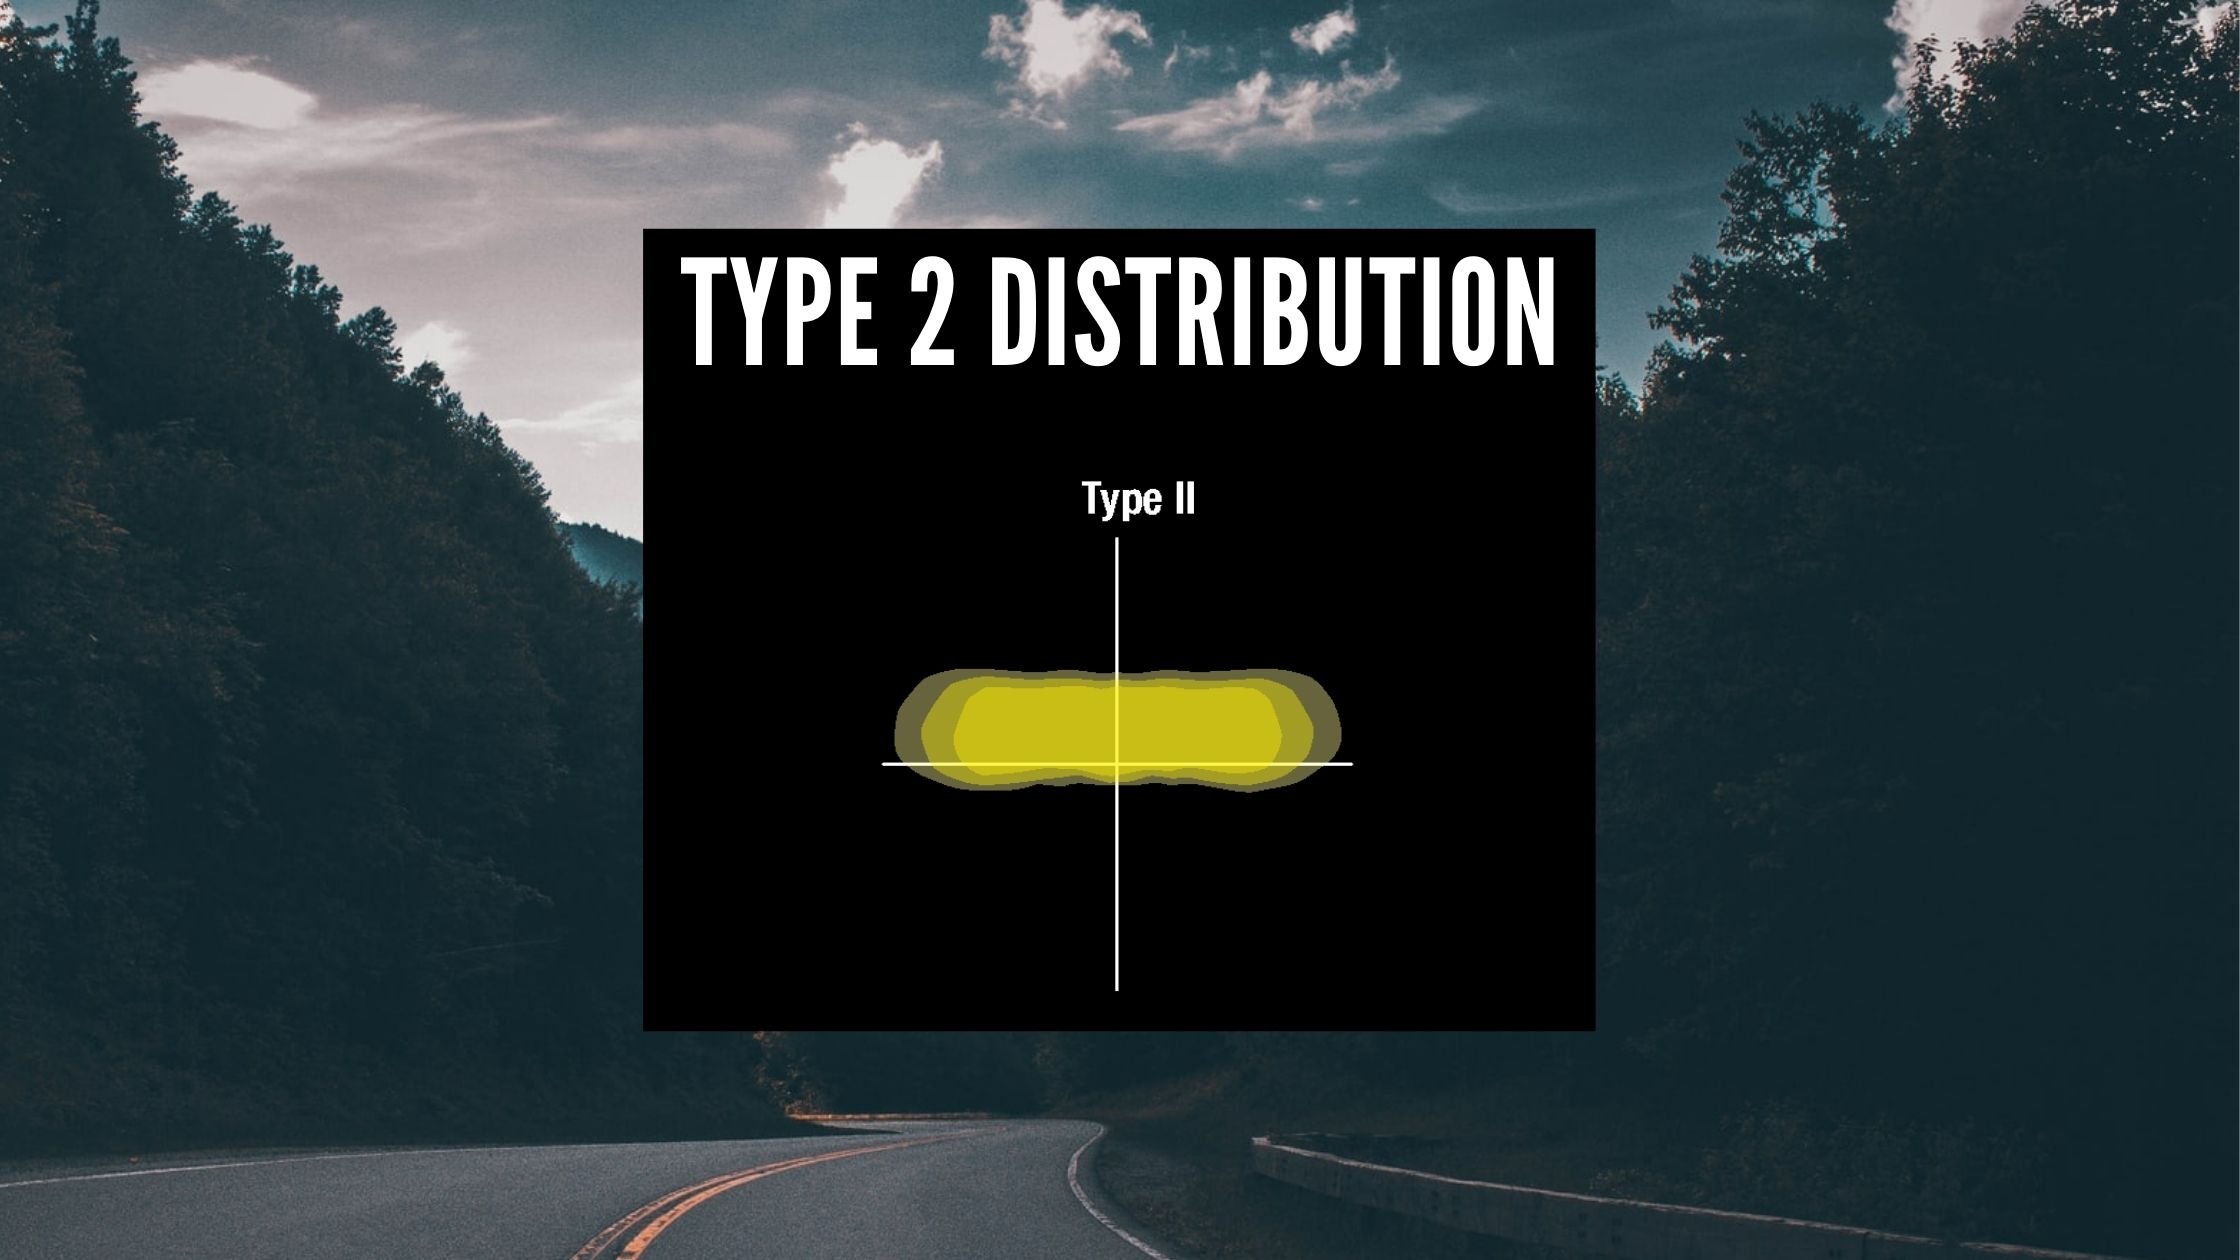 Type 2 Distribution